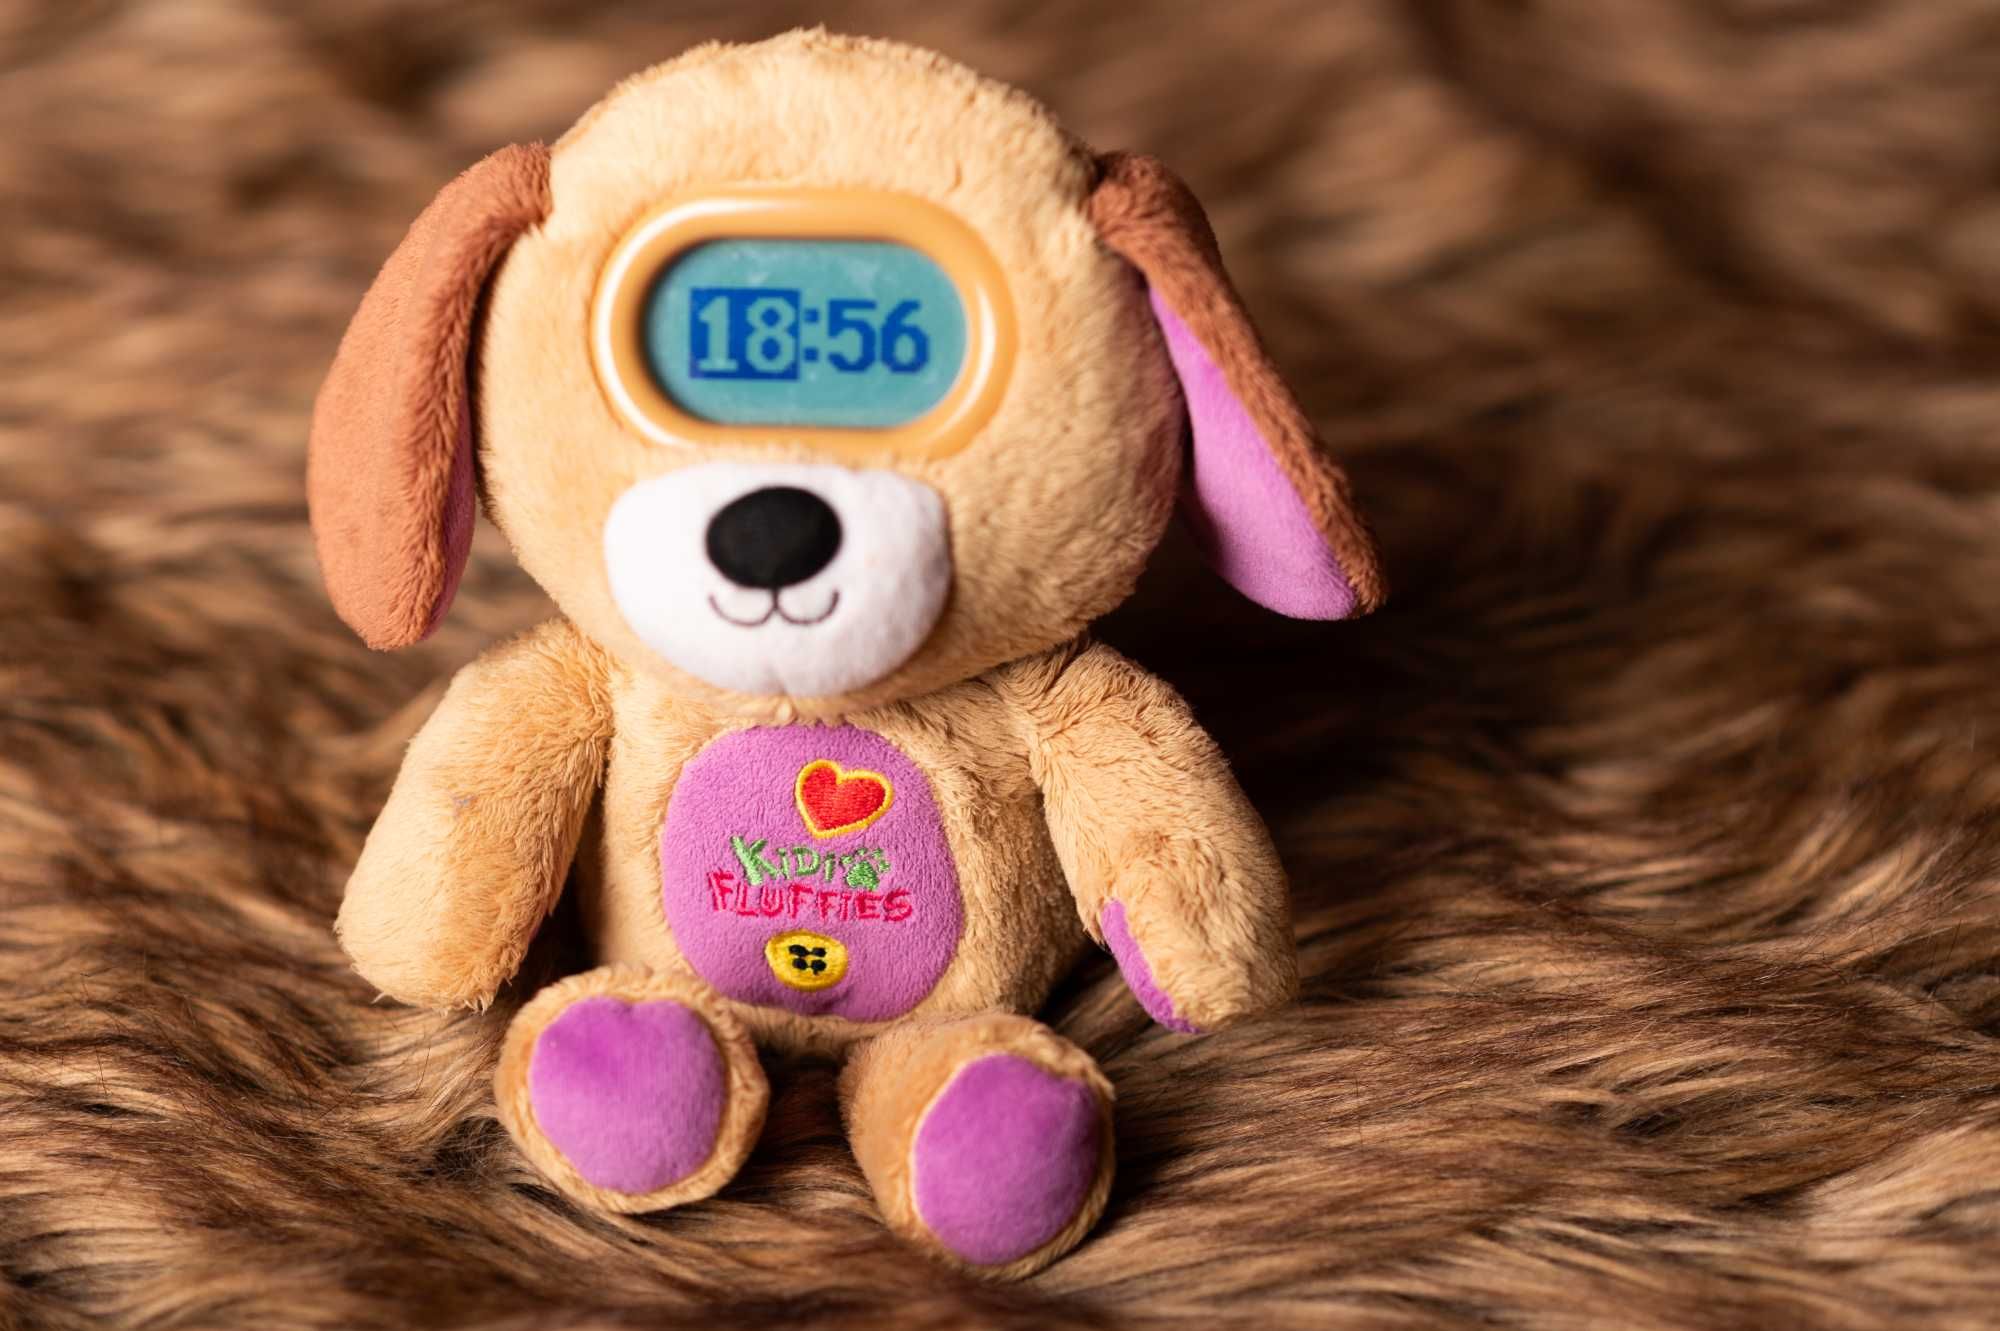 Vtech kidifluffies dog інтерактивна розвивальна іграшка розумне цуценя